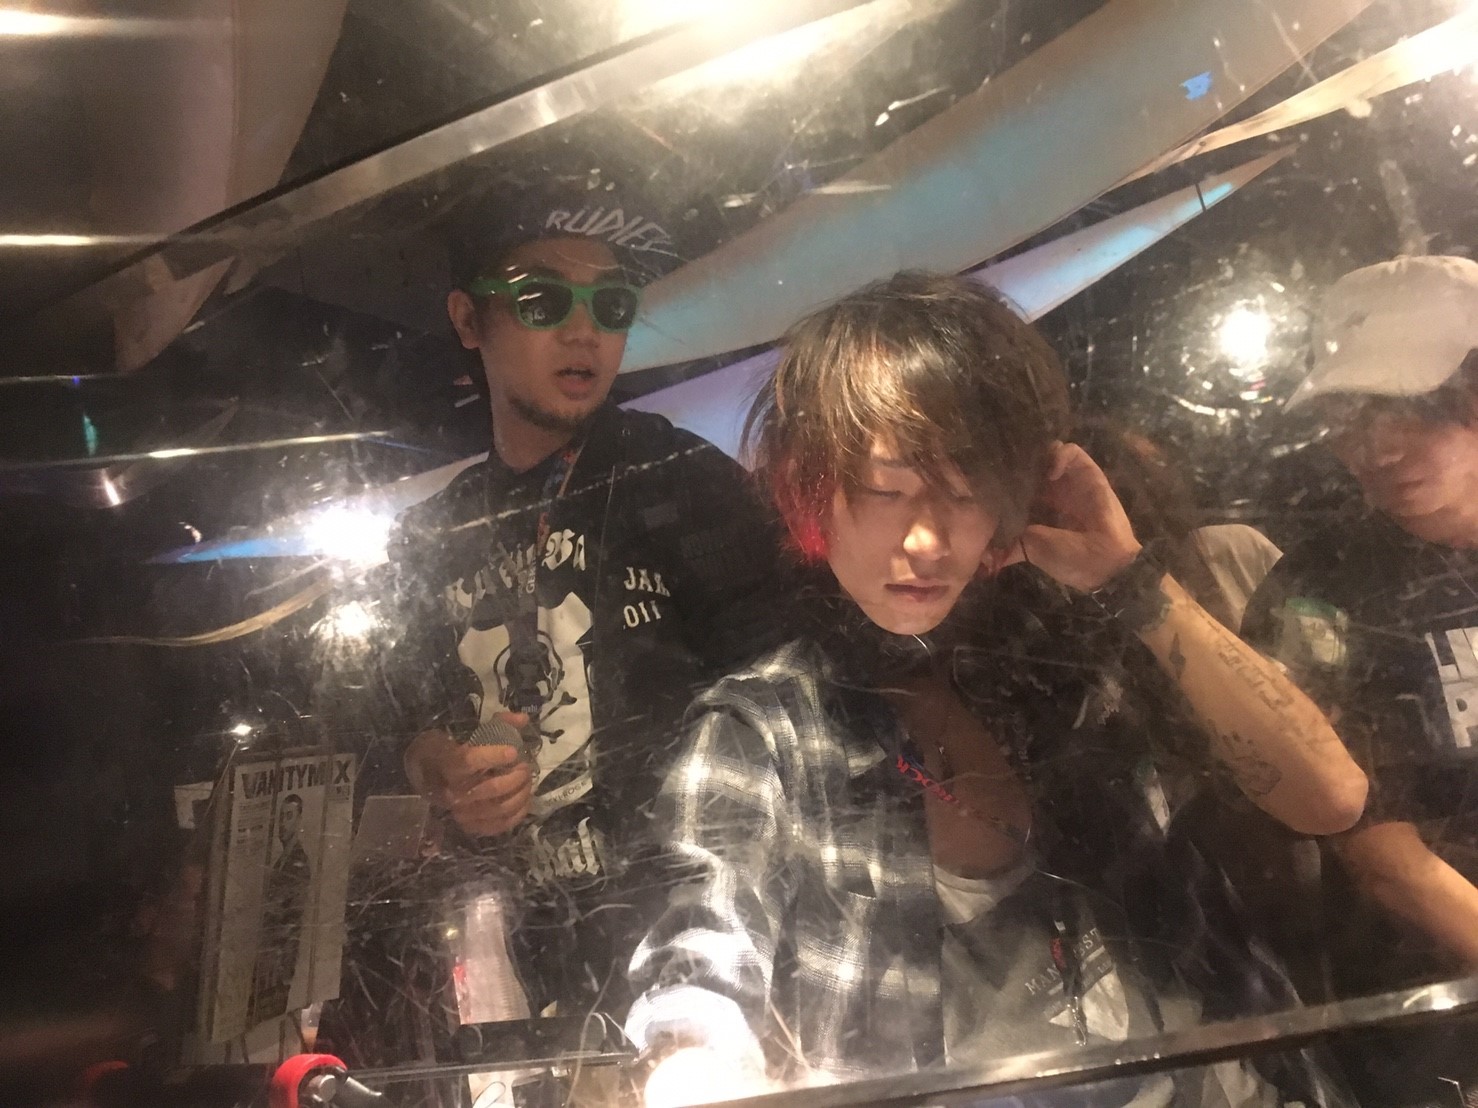 https://bar-rockaholic.jp/shibuya/blog/Image_7a34f09.jpg